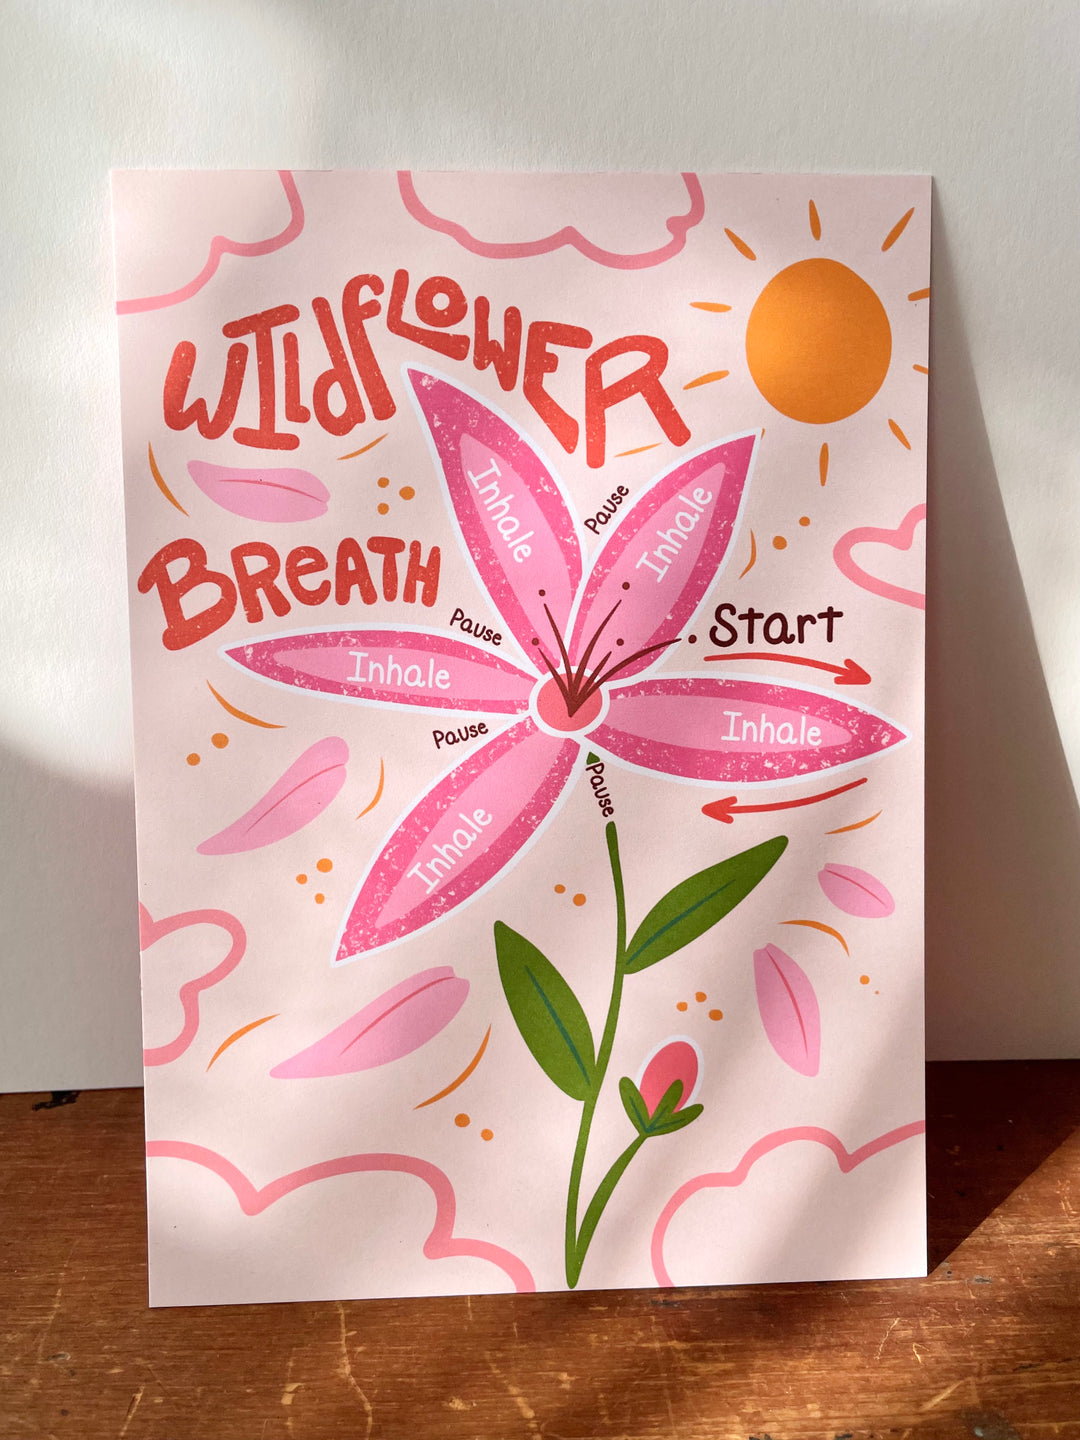 Eco Wellness Kit: Dwarf Sunflower Mindful Growing Kit, "Wildflower Breath" Meditation Card + Mindfulness Journal (Get Growing)